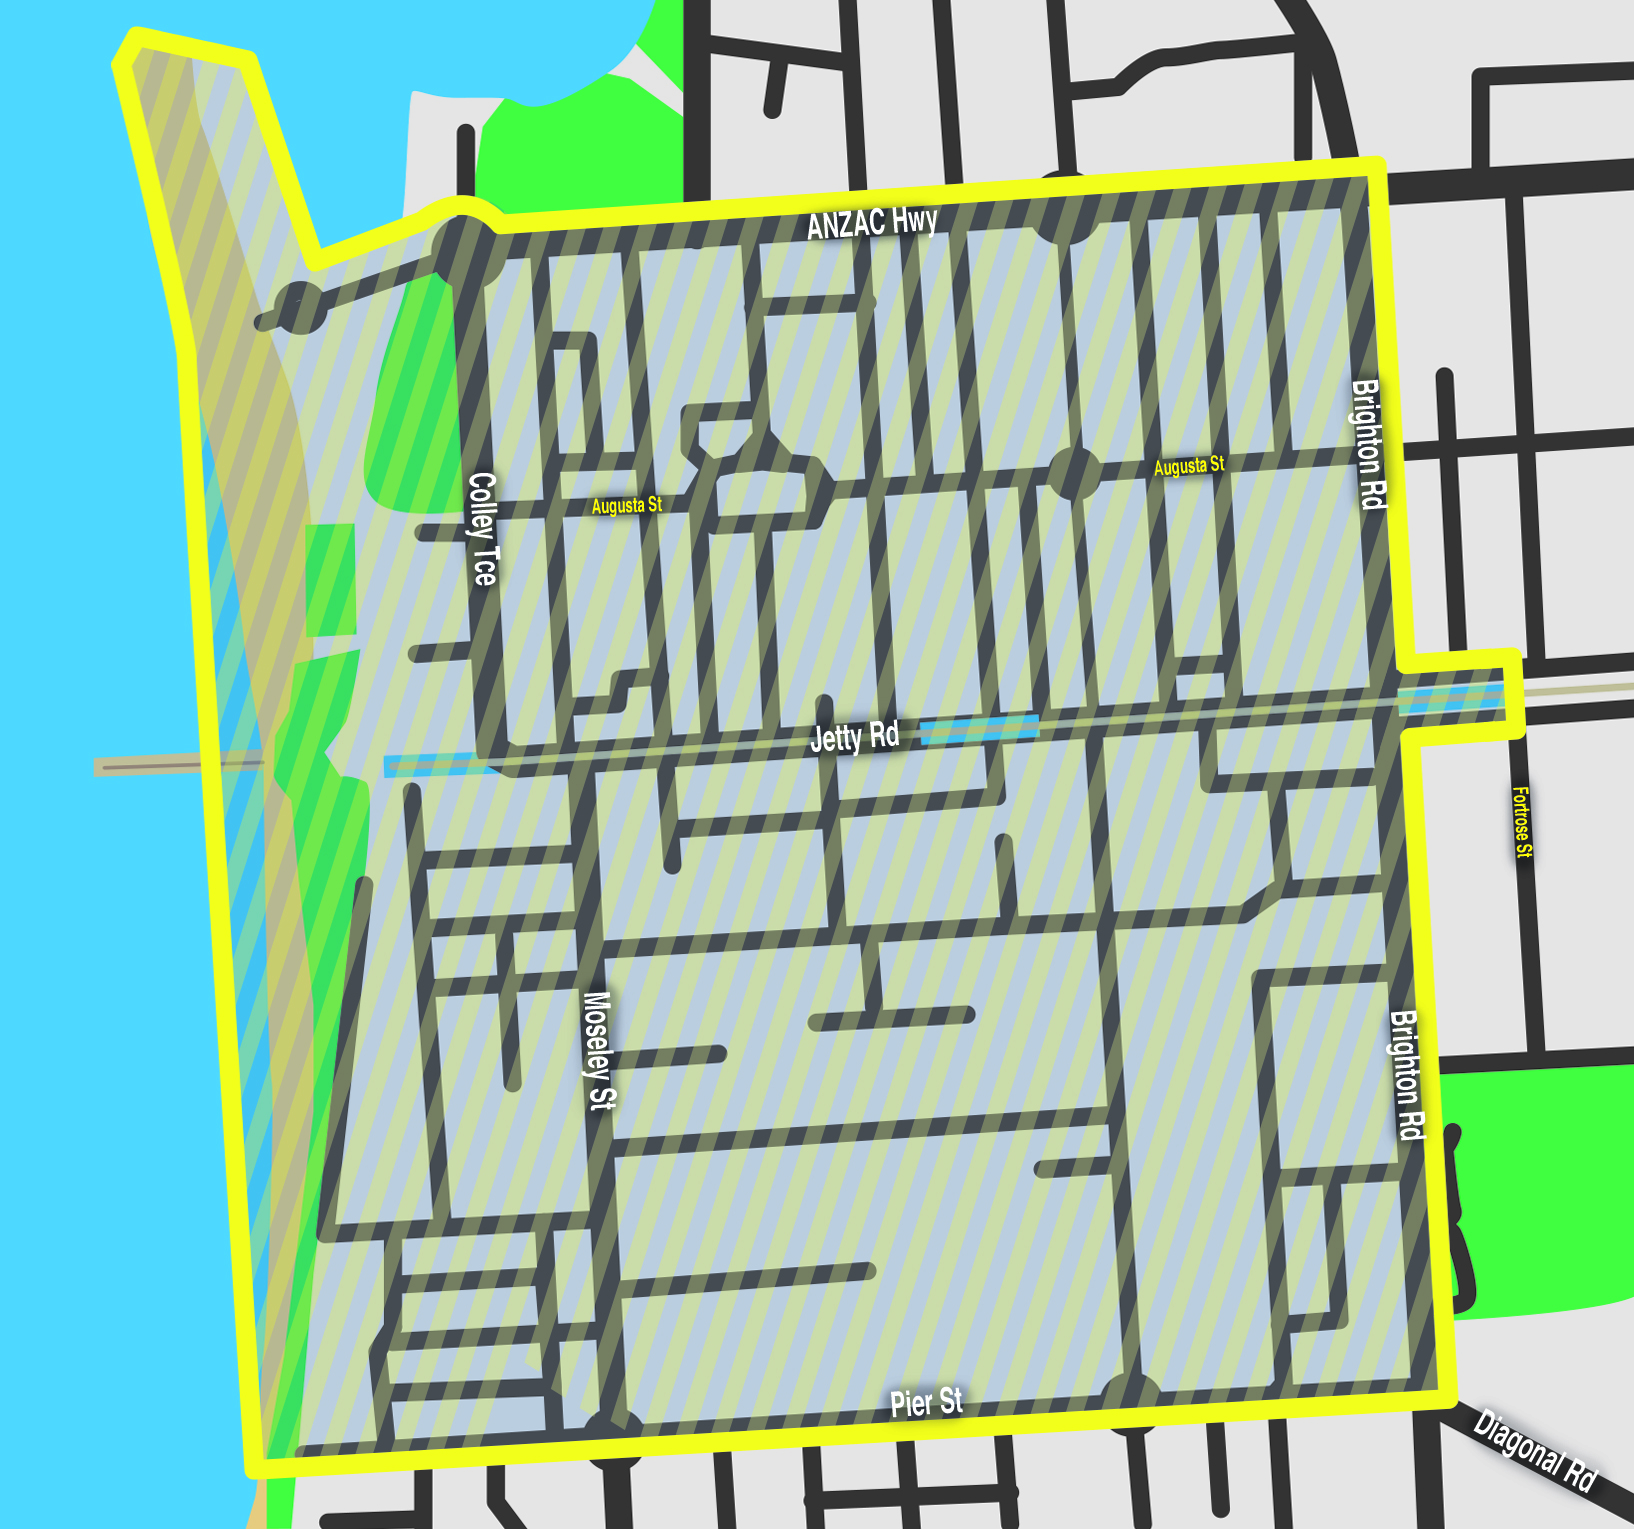 Glenelg Declared Public Precinct Area